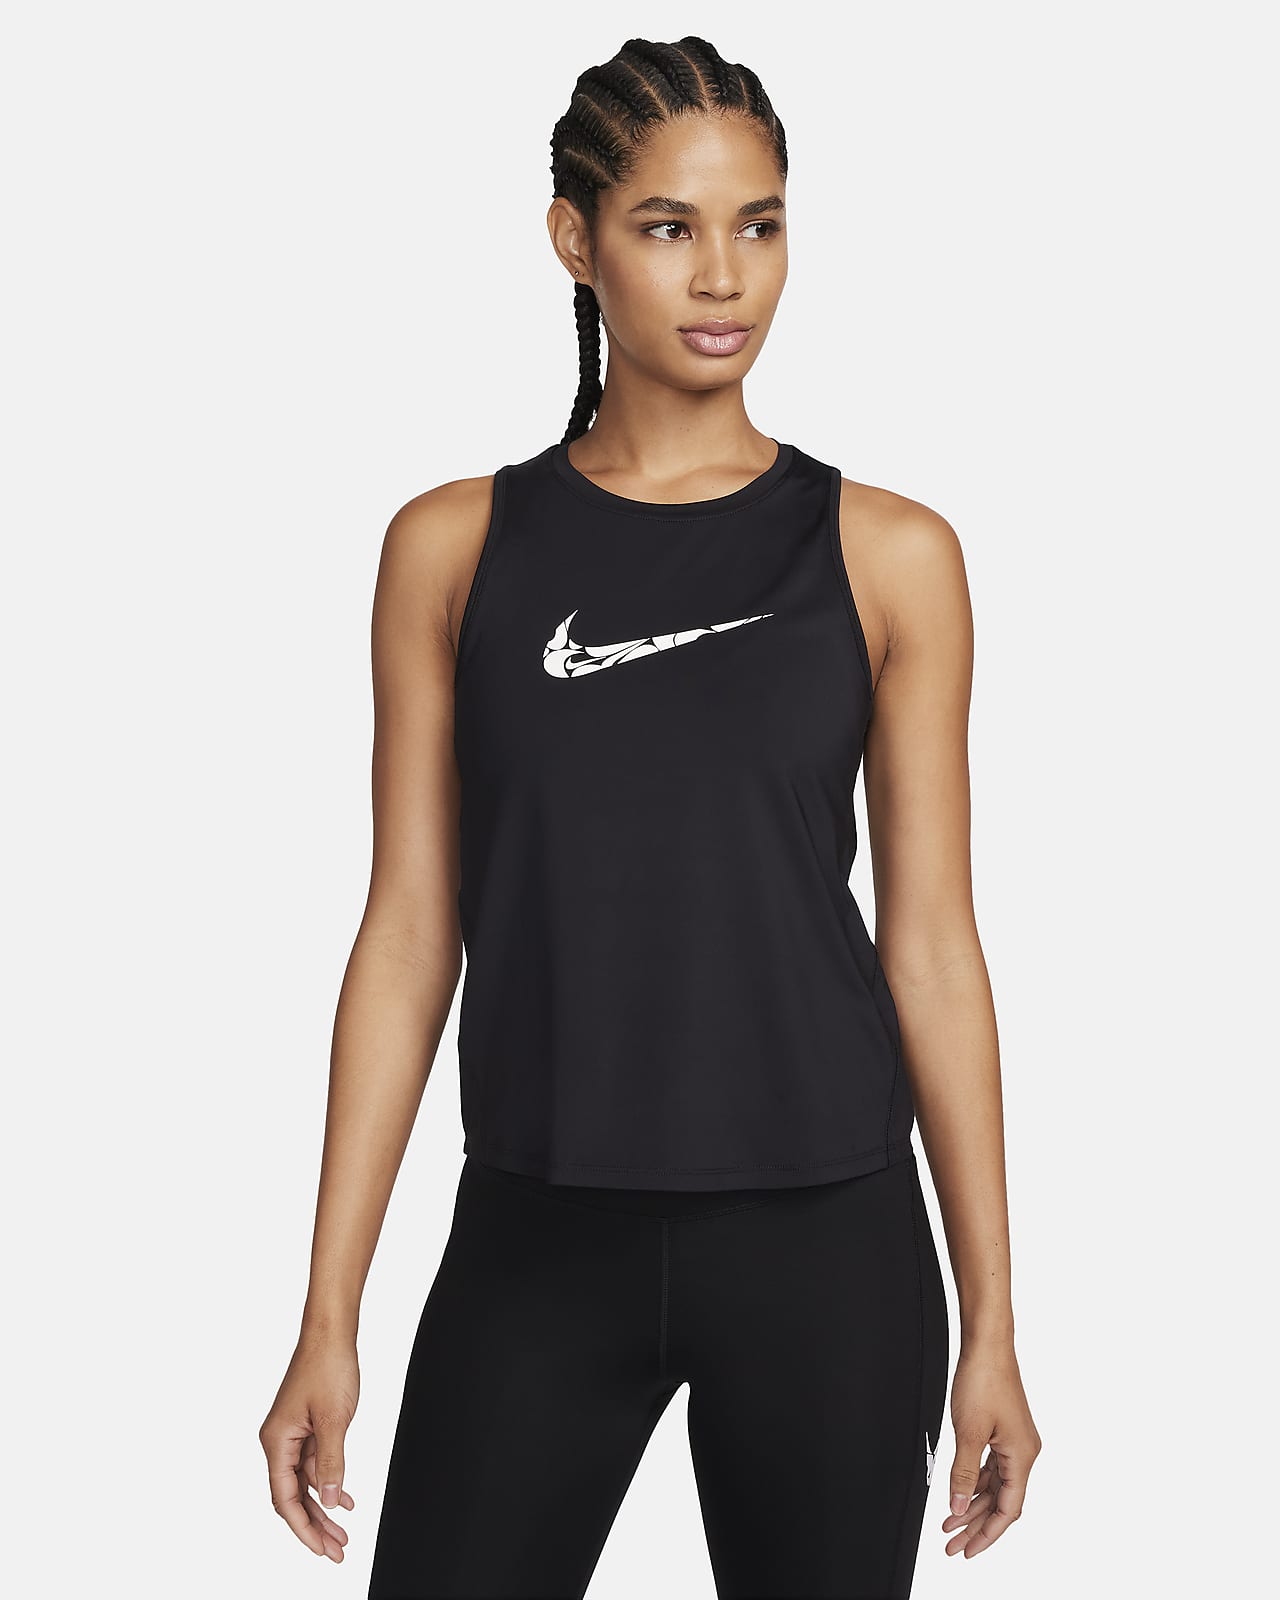 Nike One Women's Graphic Running Tank Top. Nike LU